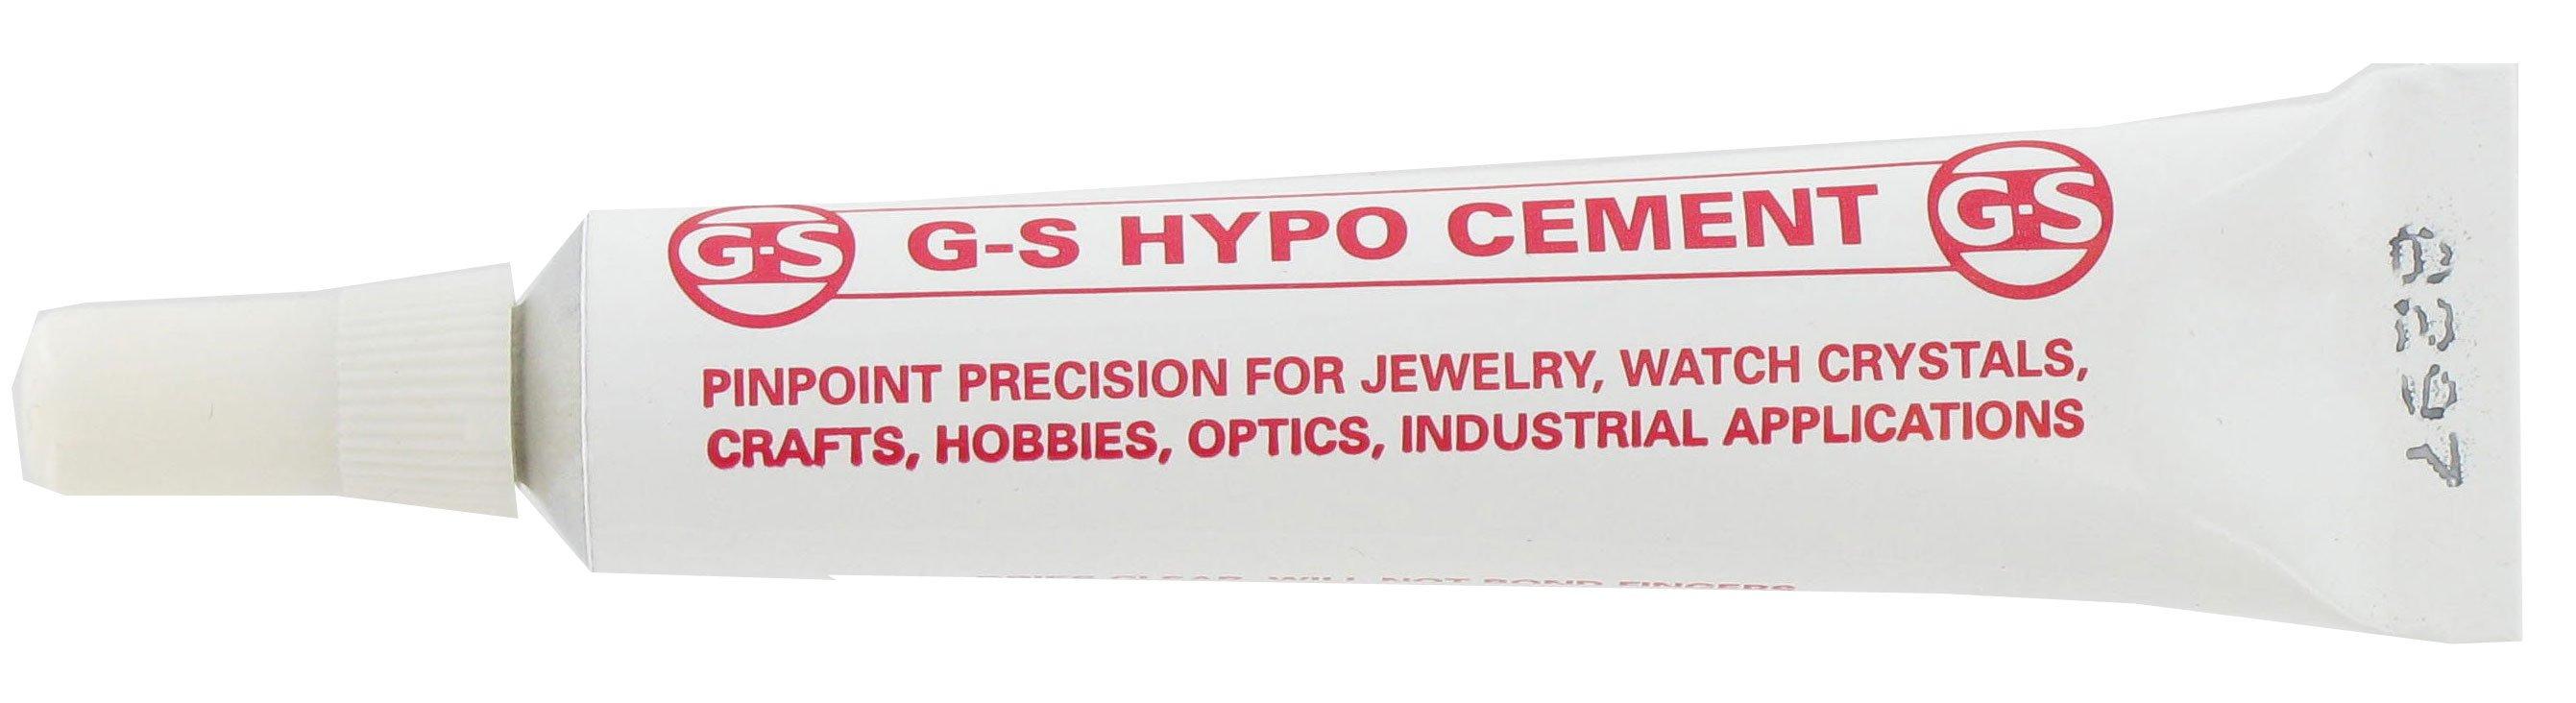 G-S Hypo Cement with Precision Applicator, 9ml 1/3 Fl oz,Jewelry Making Glue